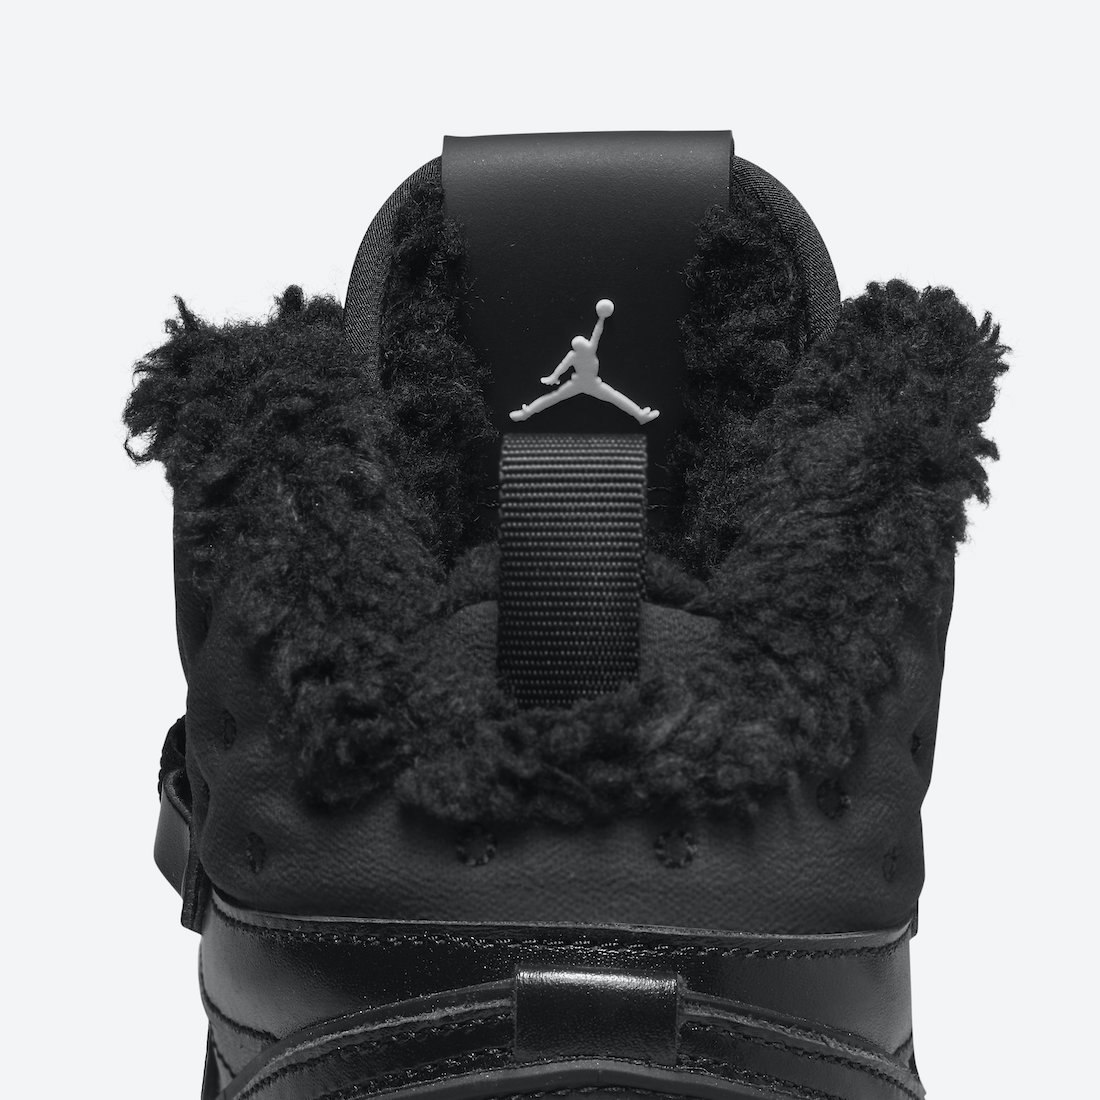 Air Jordan 1 Acclimate “Triple Black”